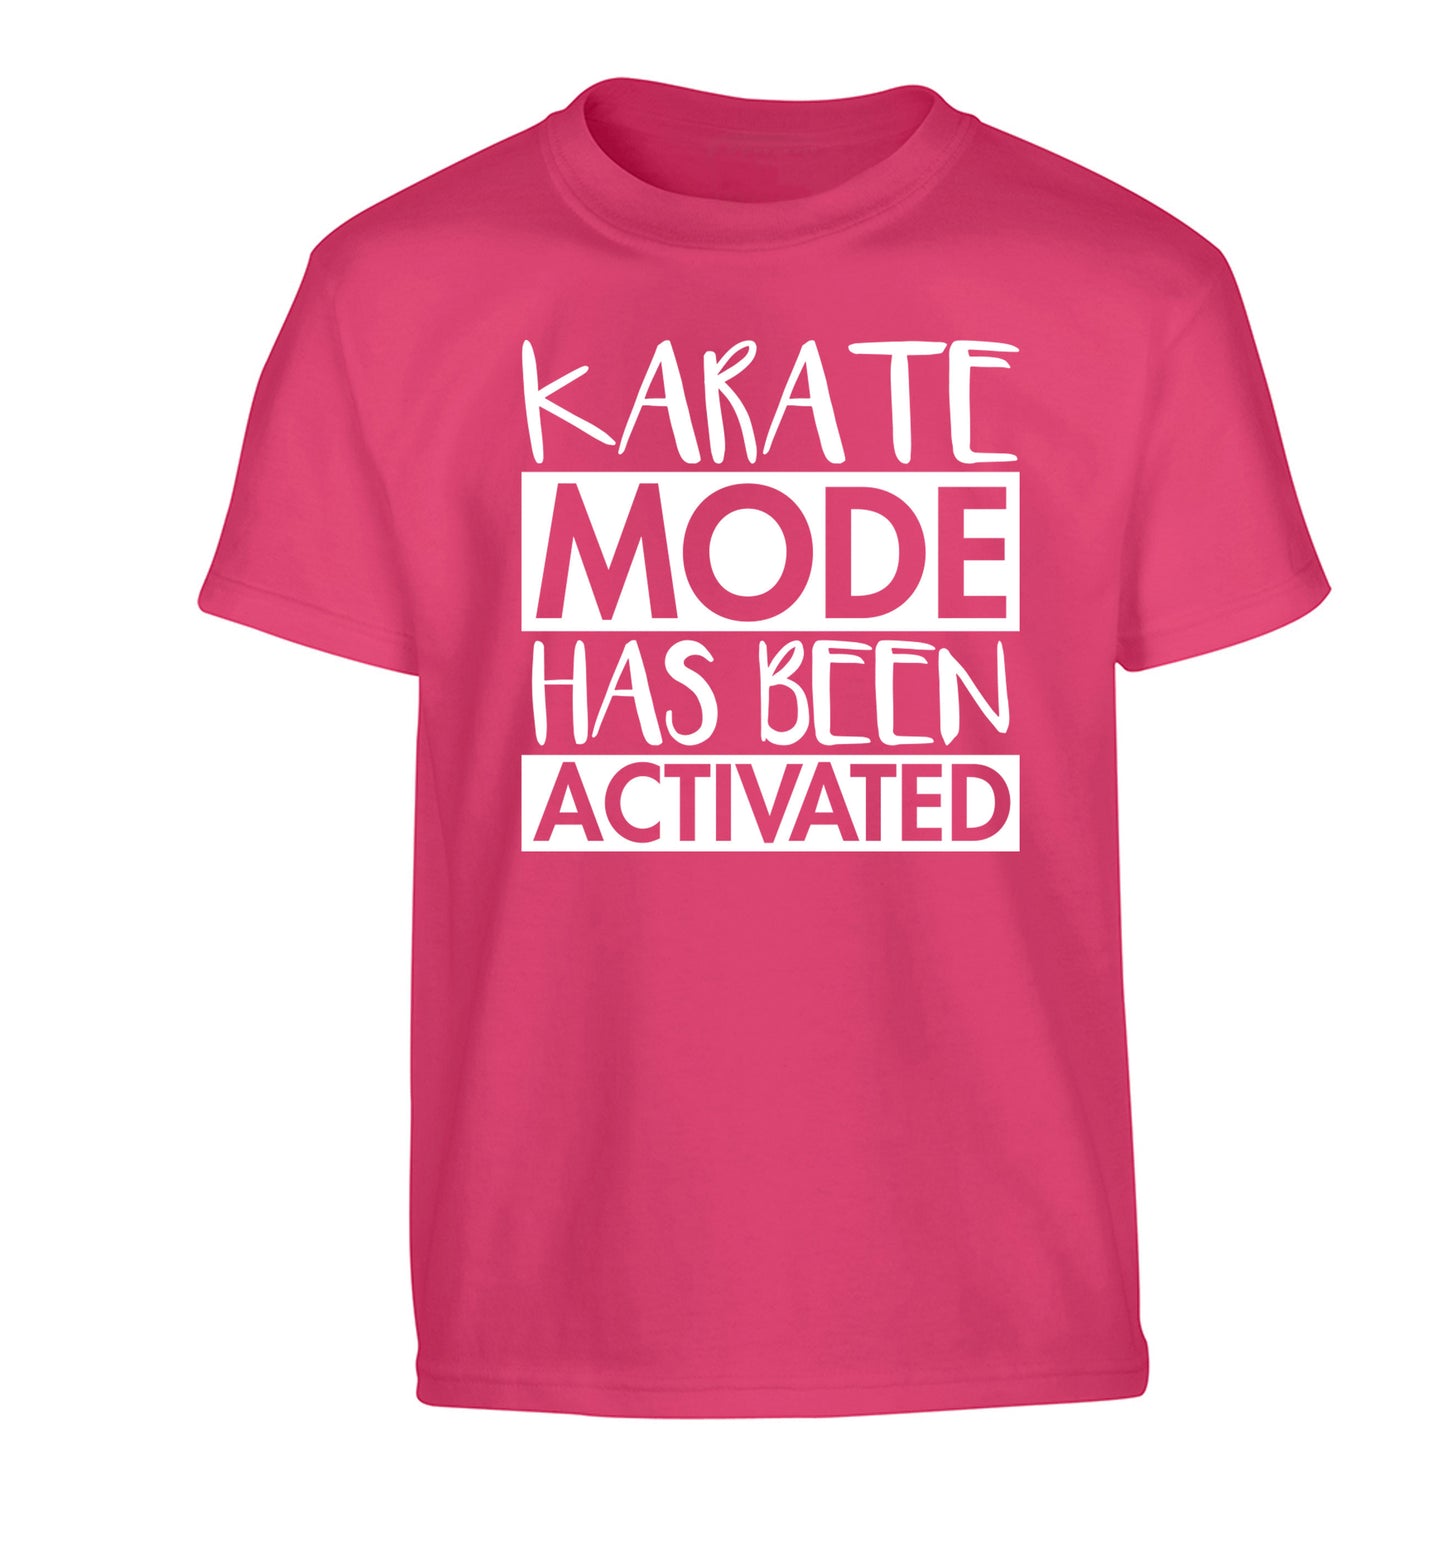 Karate mode activated Children's pink Tshirt 12-14 Years